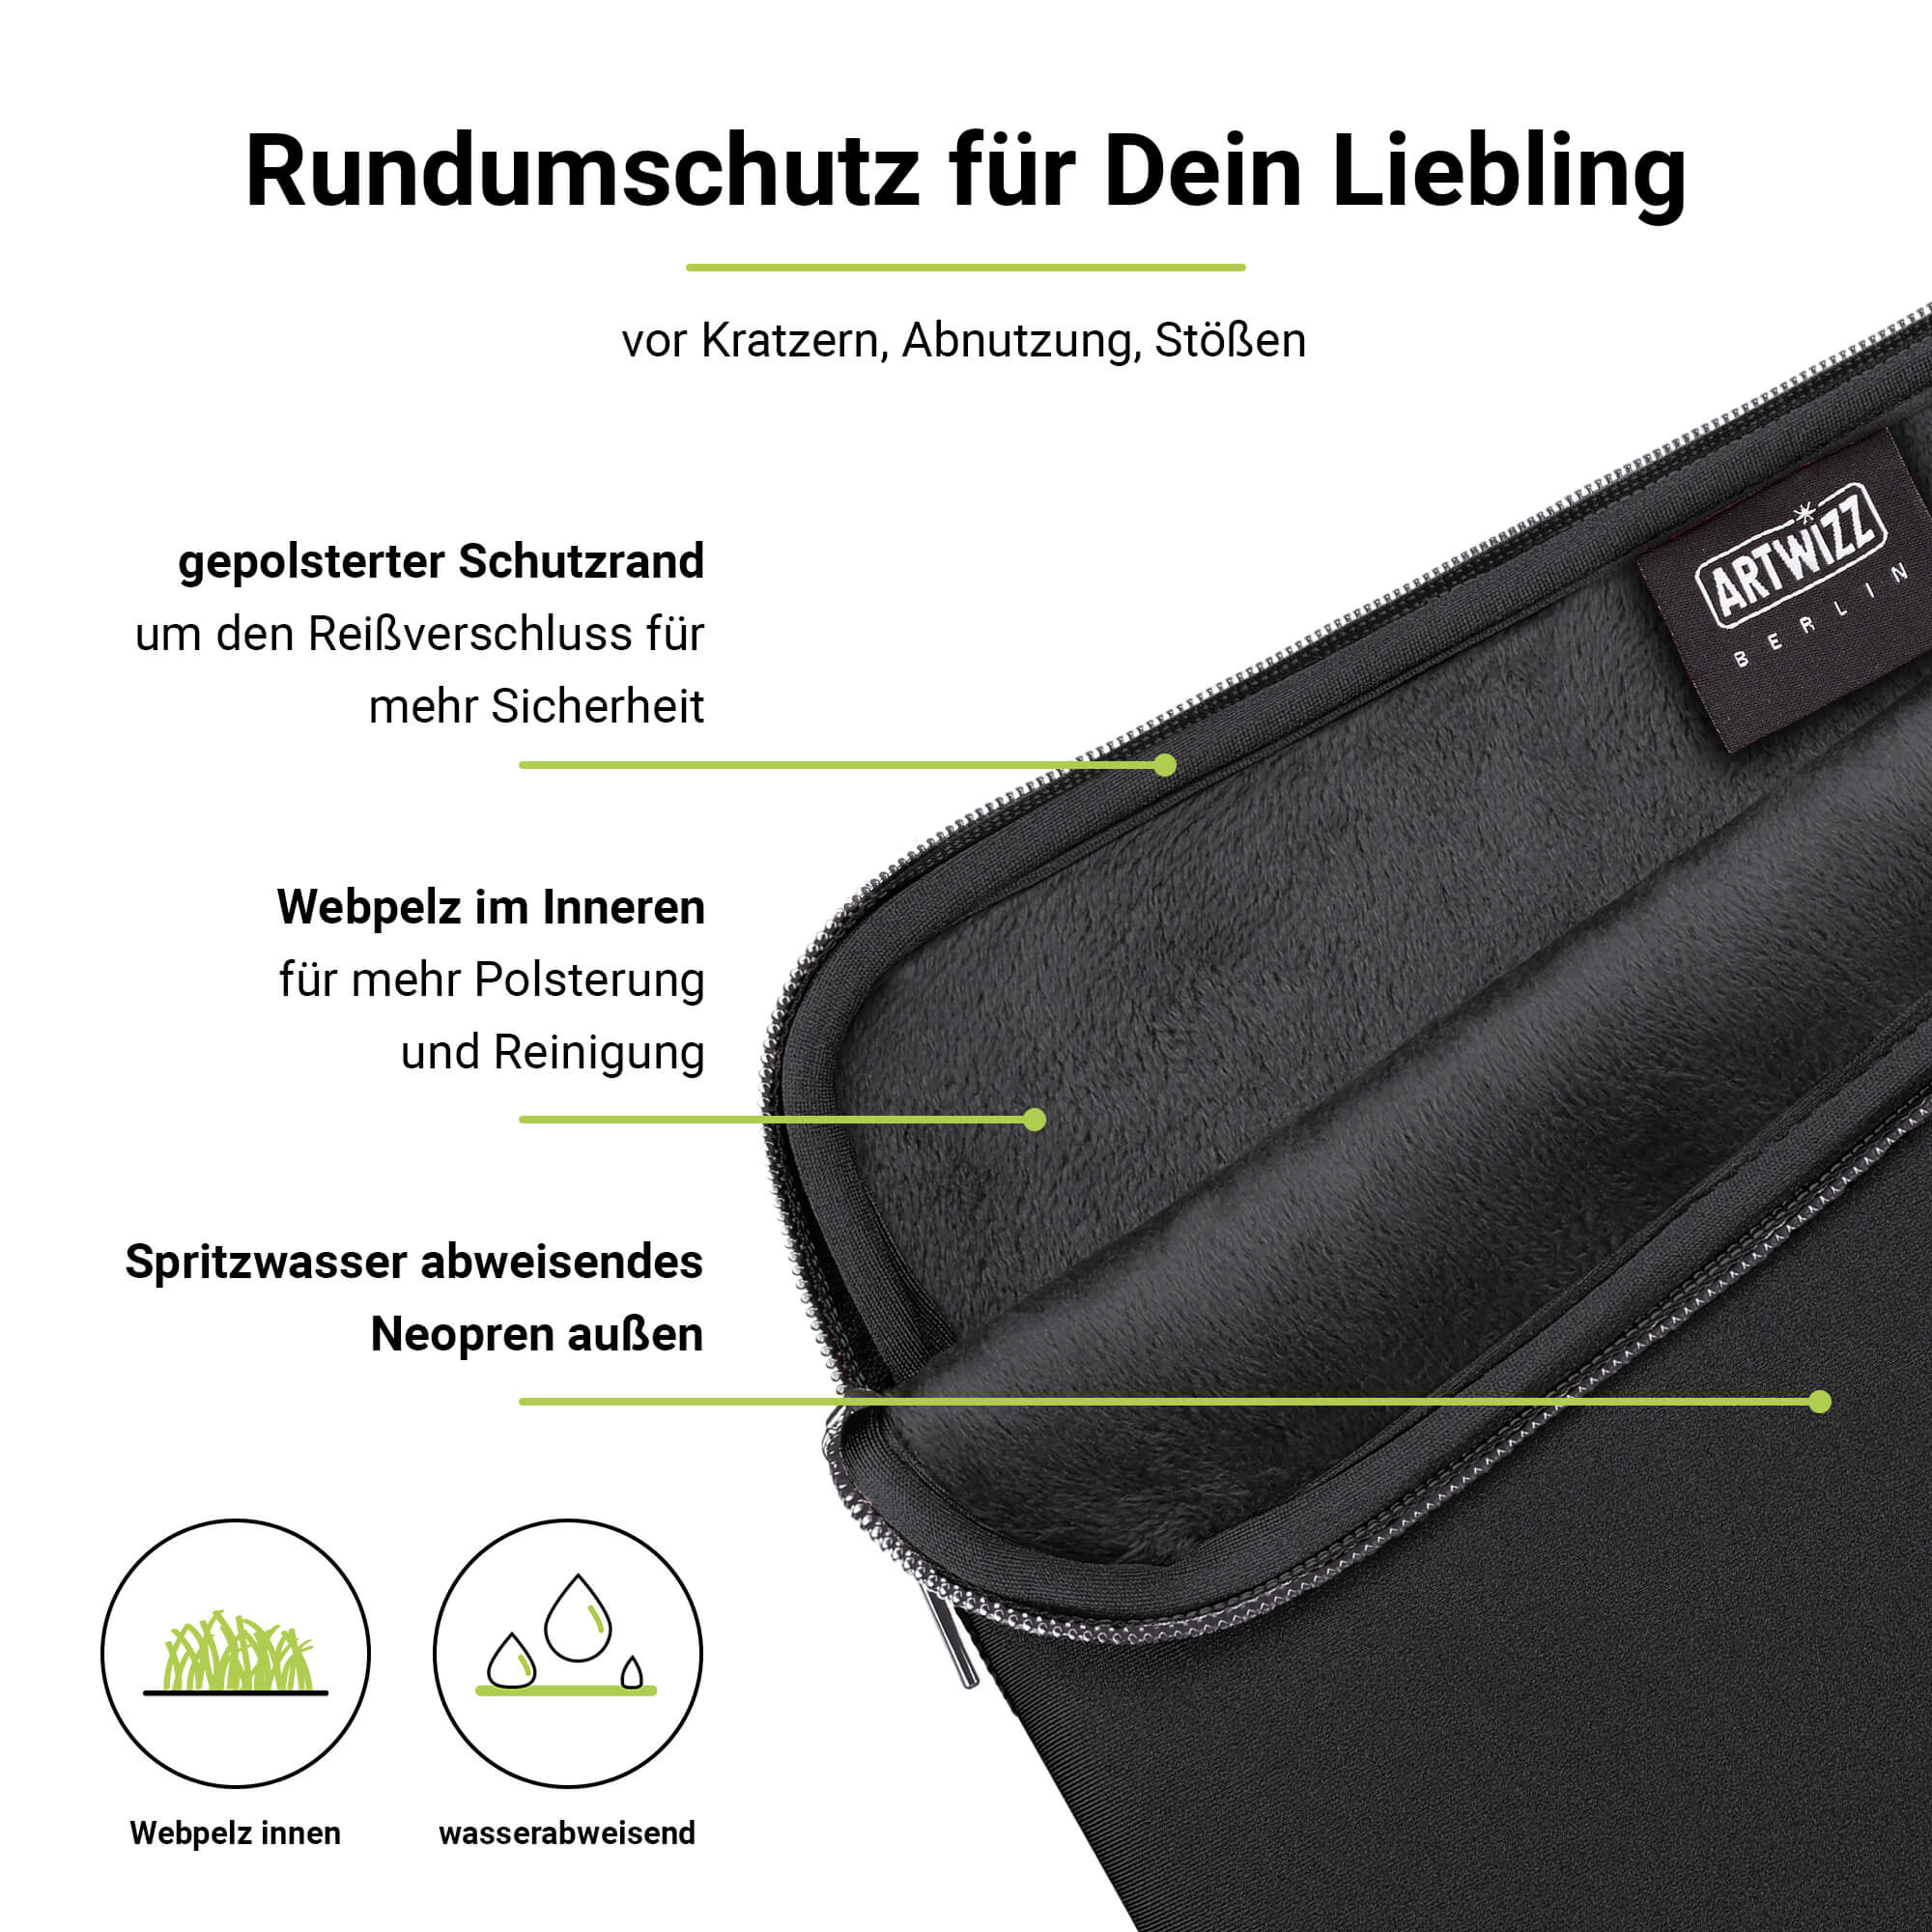 ARTWIZZ Neoprene Sleeve Apple Notebook Sleeve Schwarz Tasche für Neopren